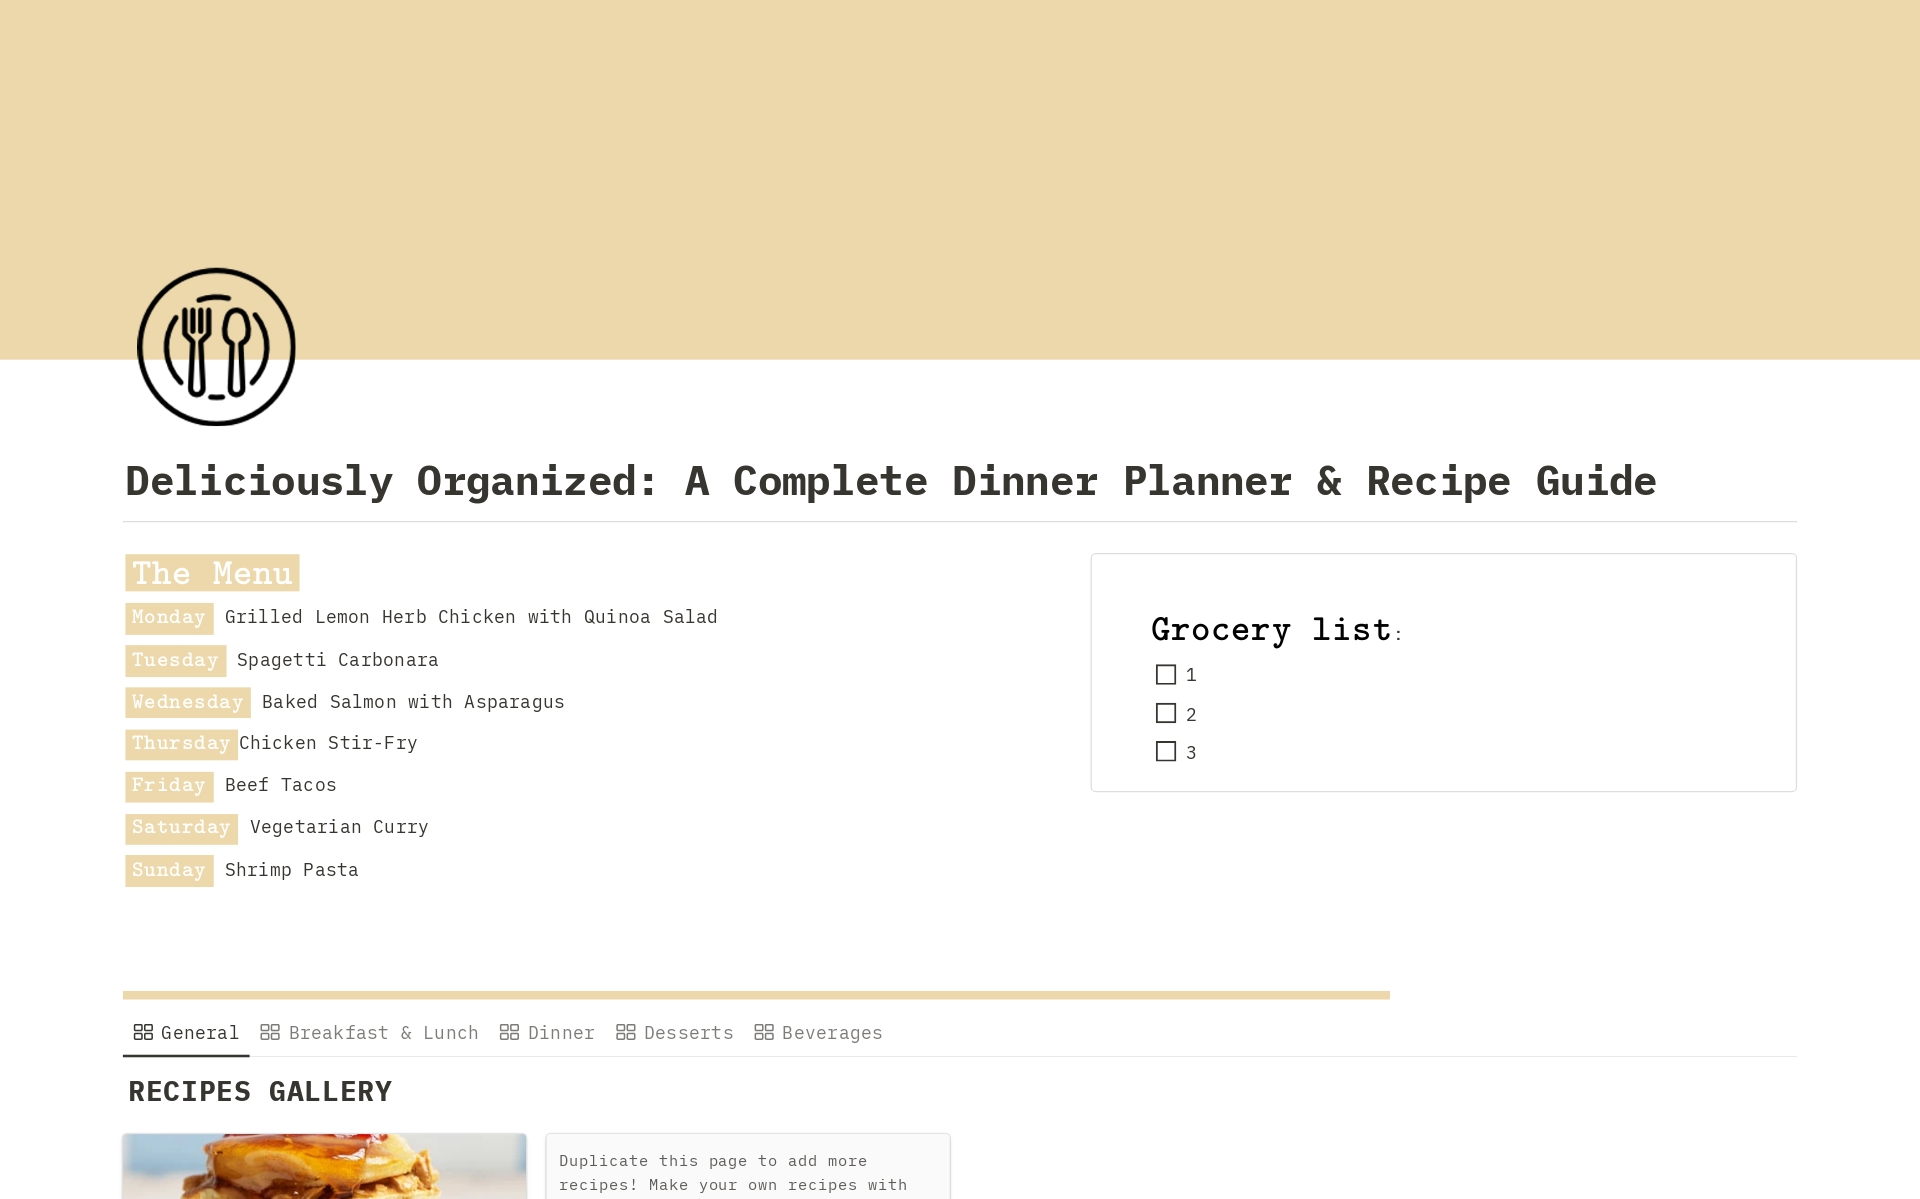 Aperçu du modèle de A Complete Dinner Planner & Recipe Guide